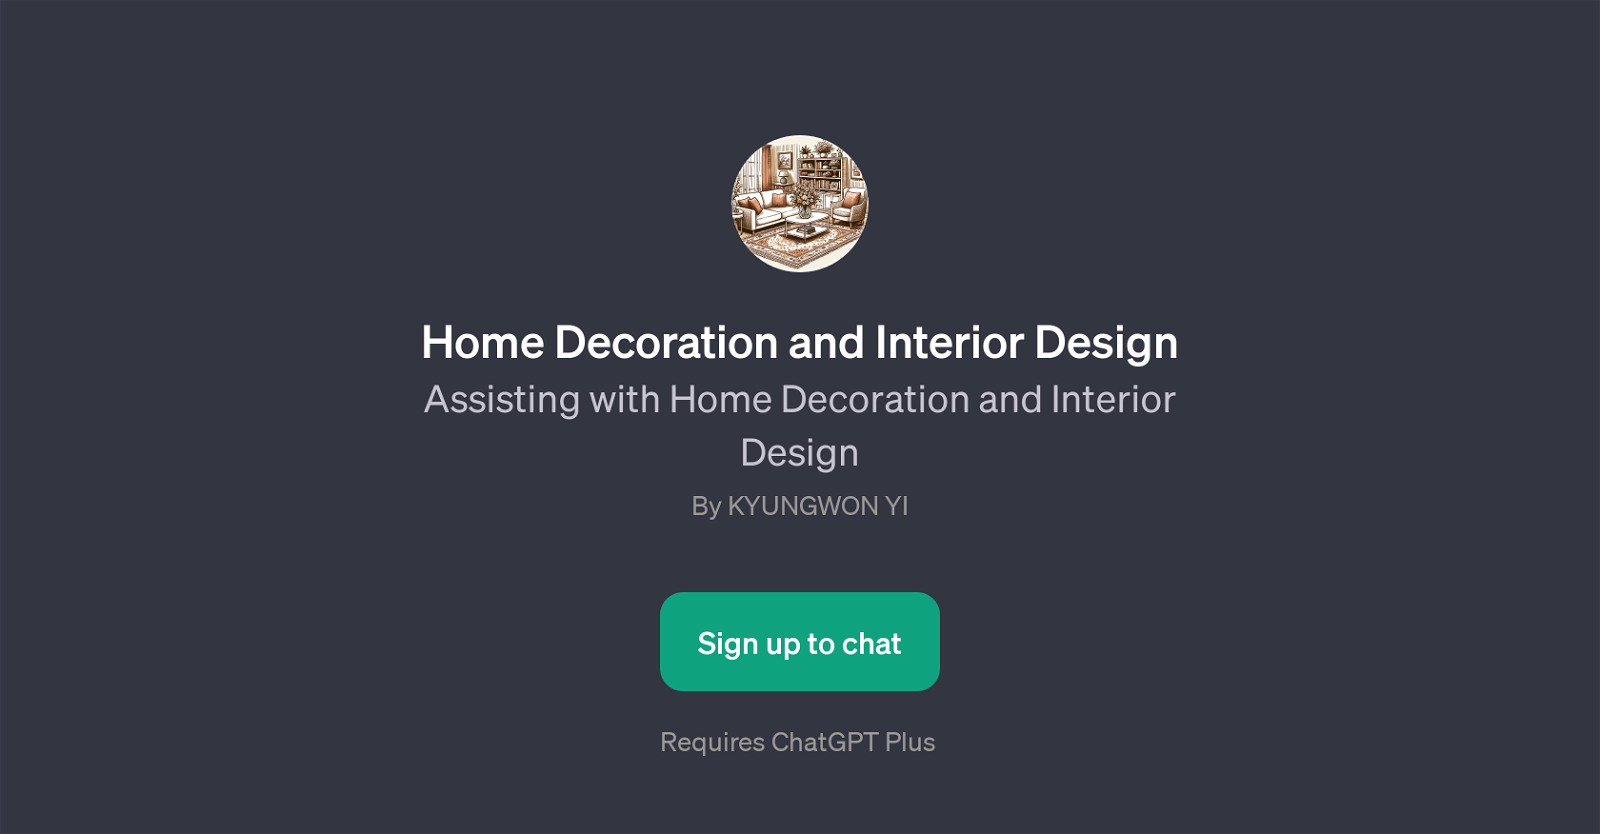 Home Decoration and Interior Design website